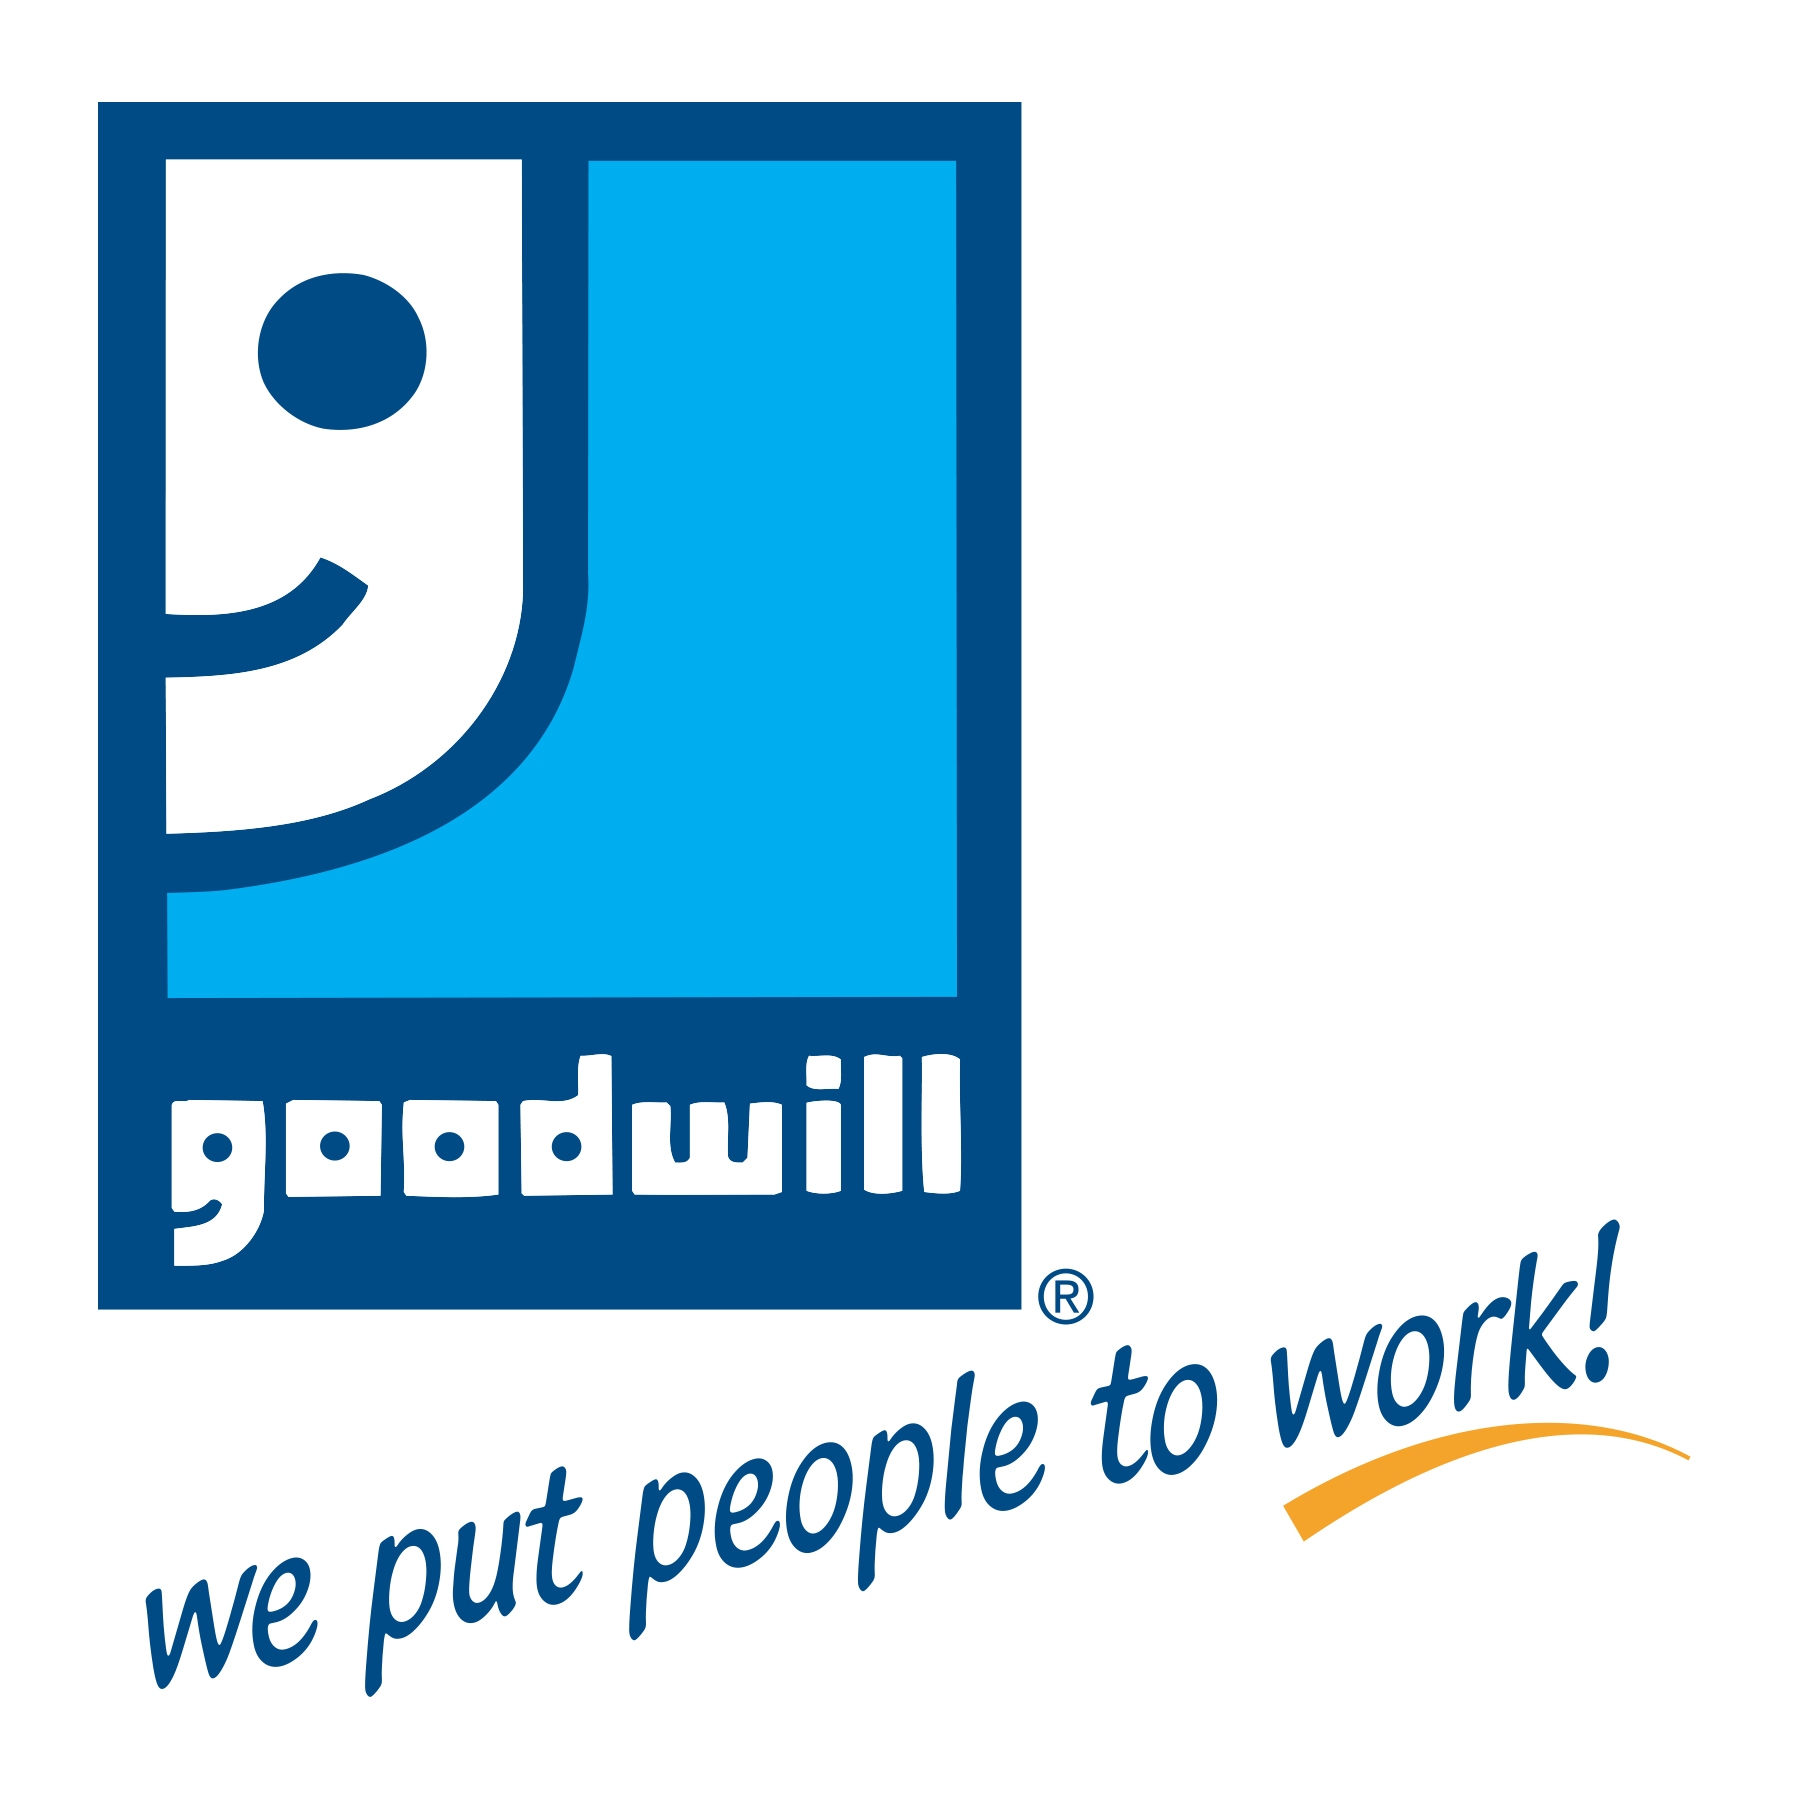 goodwill online shopping site